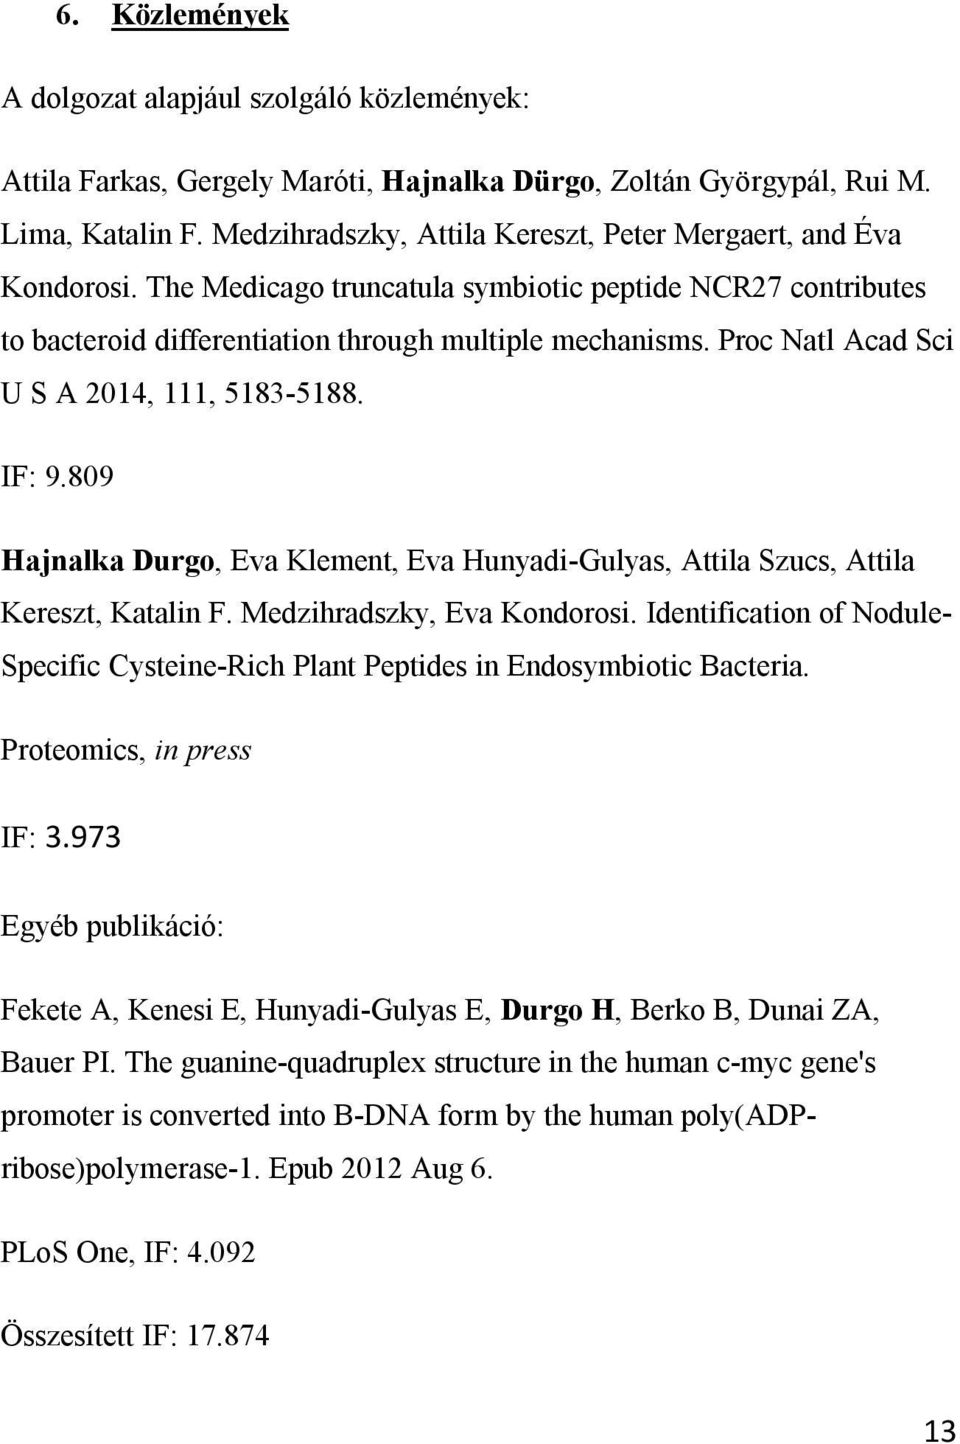 Proc Natl Acad Sci U S A 2014, 111, 5183-5188. IF: 9.809 Hajnalka Durgo, Eva Klement, Eva Hunyadi-Gulyas, Attila Szucs, Attila Kereszt, Katalin F. Medzihradszky, Eva Kondorosi.